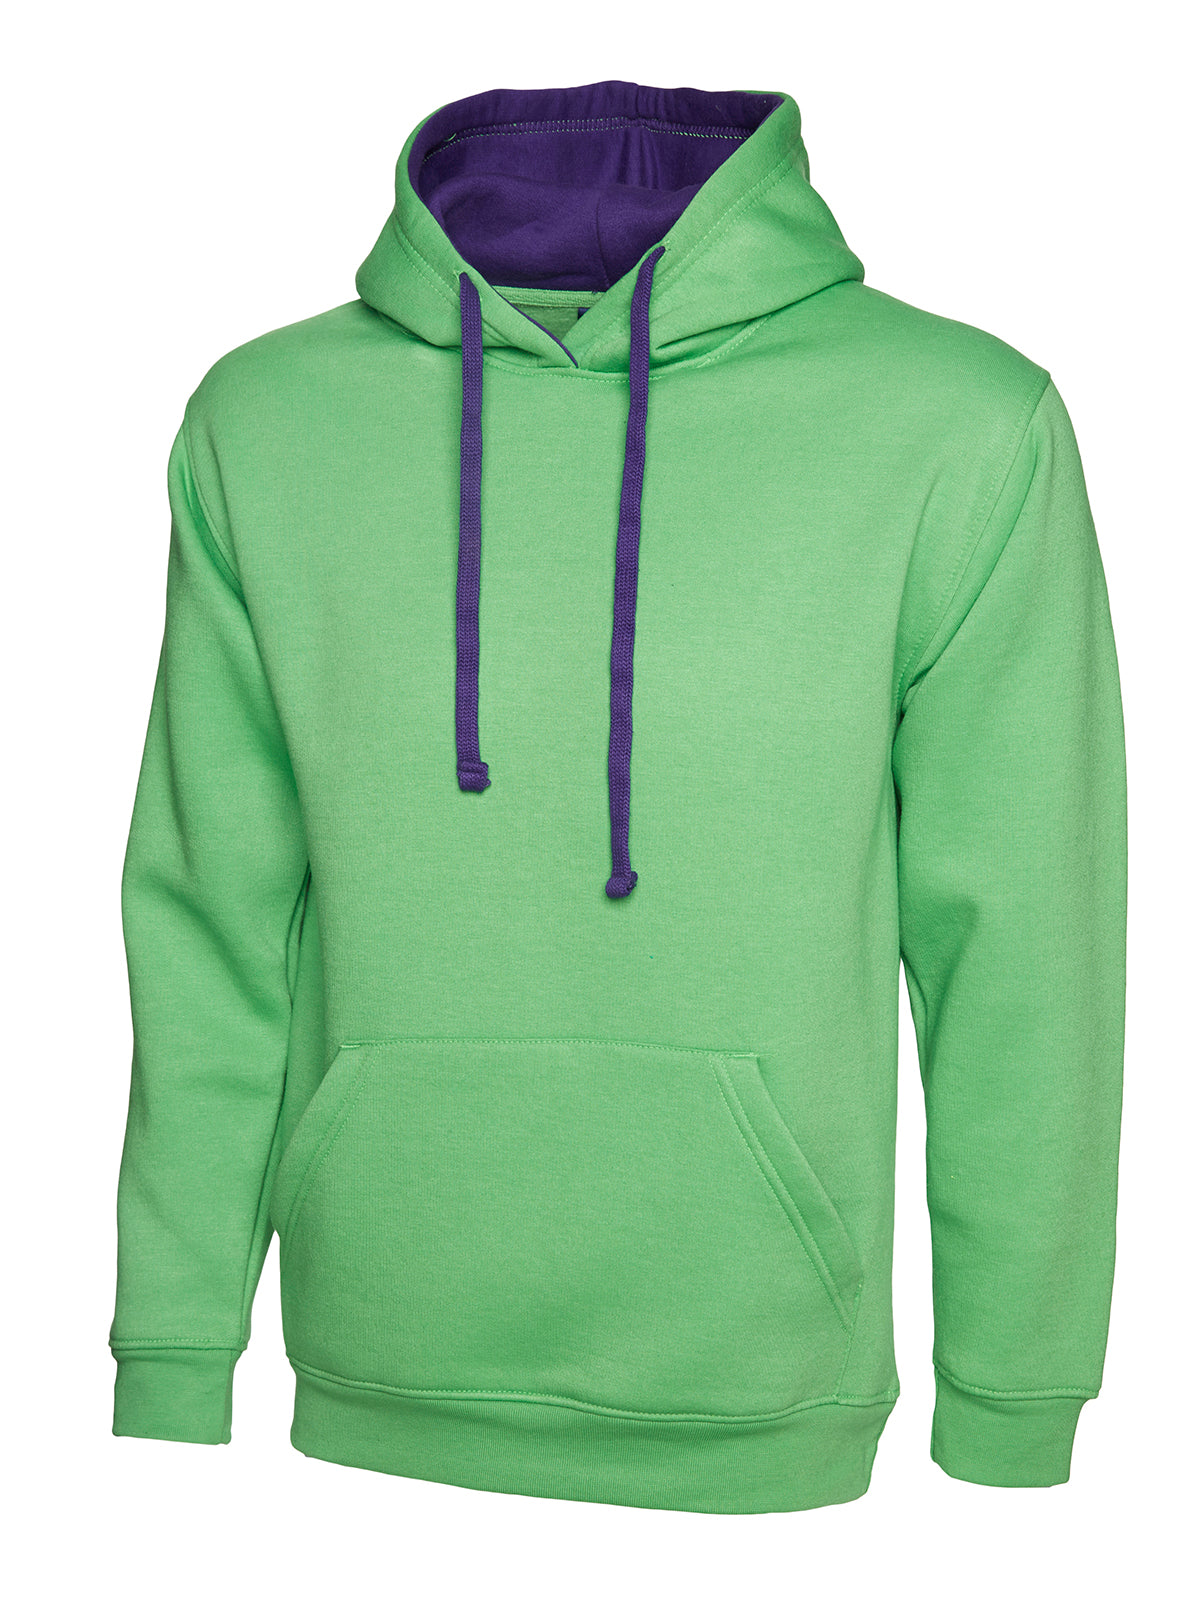 Uneek Contrast Hooded Sweatshirt UC507 - Lime/Purple